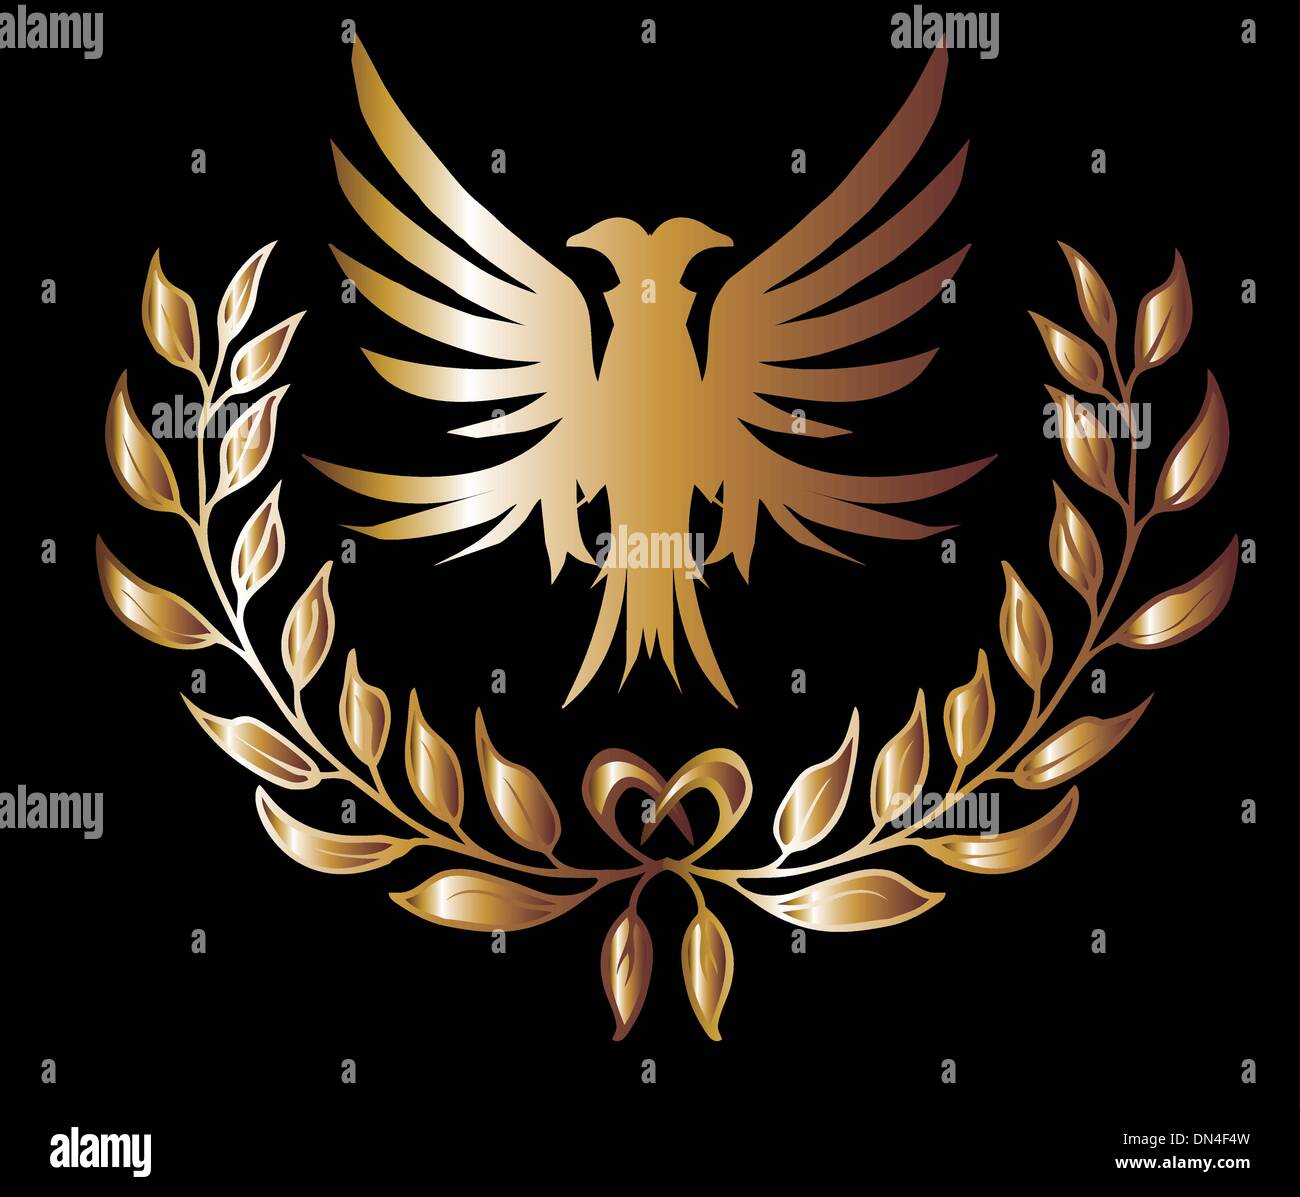 roaring Lion logo